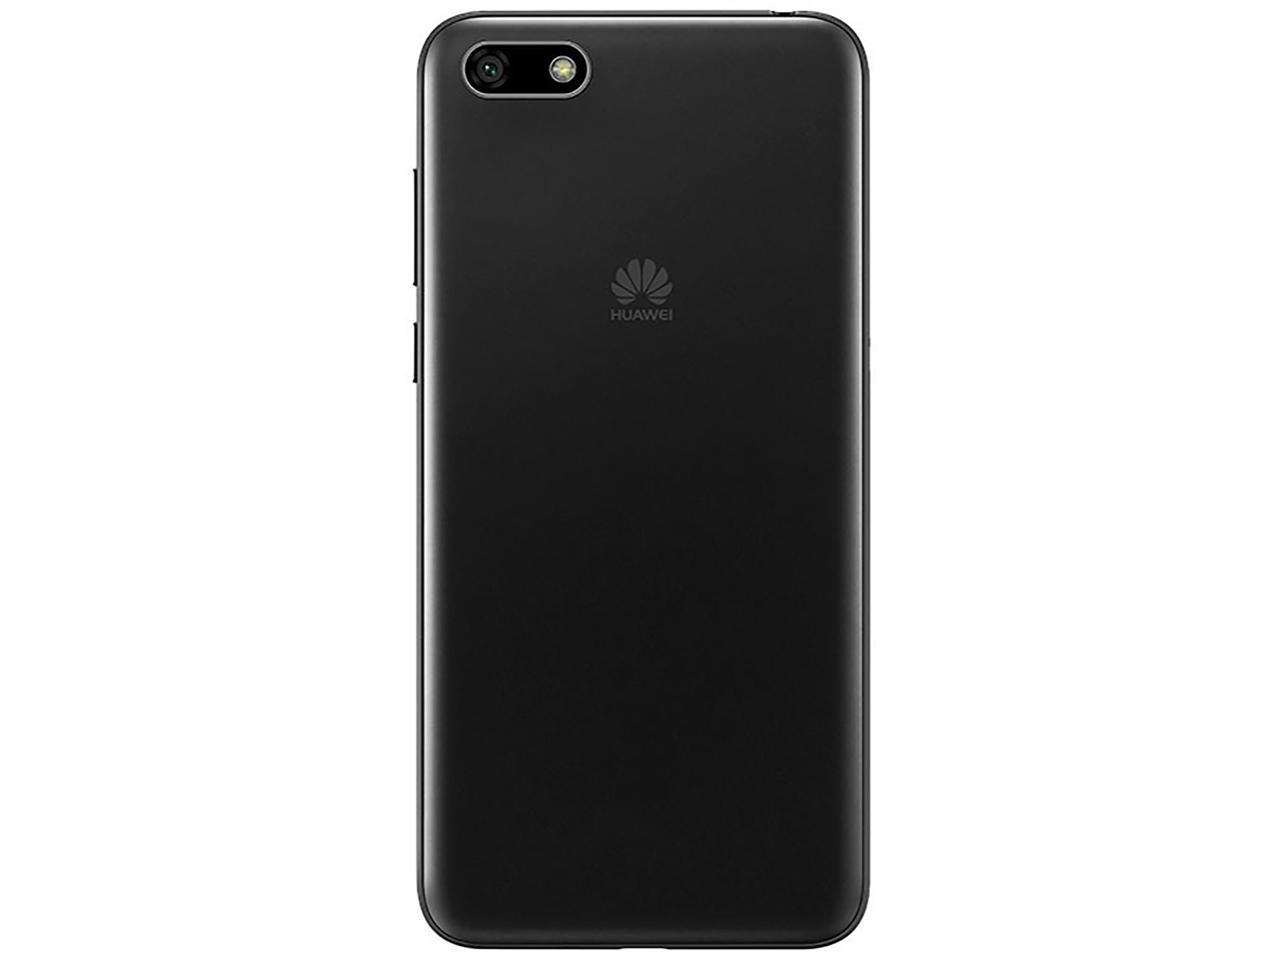 Huawei Y5 (2018) 16GB Unlocked GSM Phone 13MP Camera 